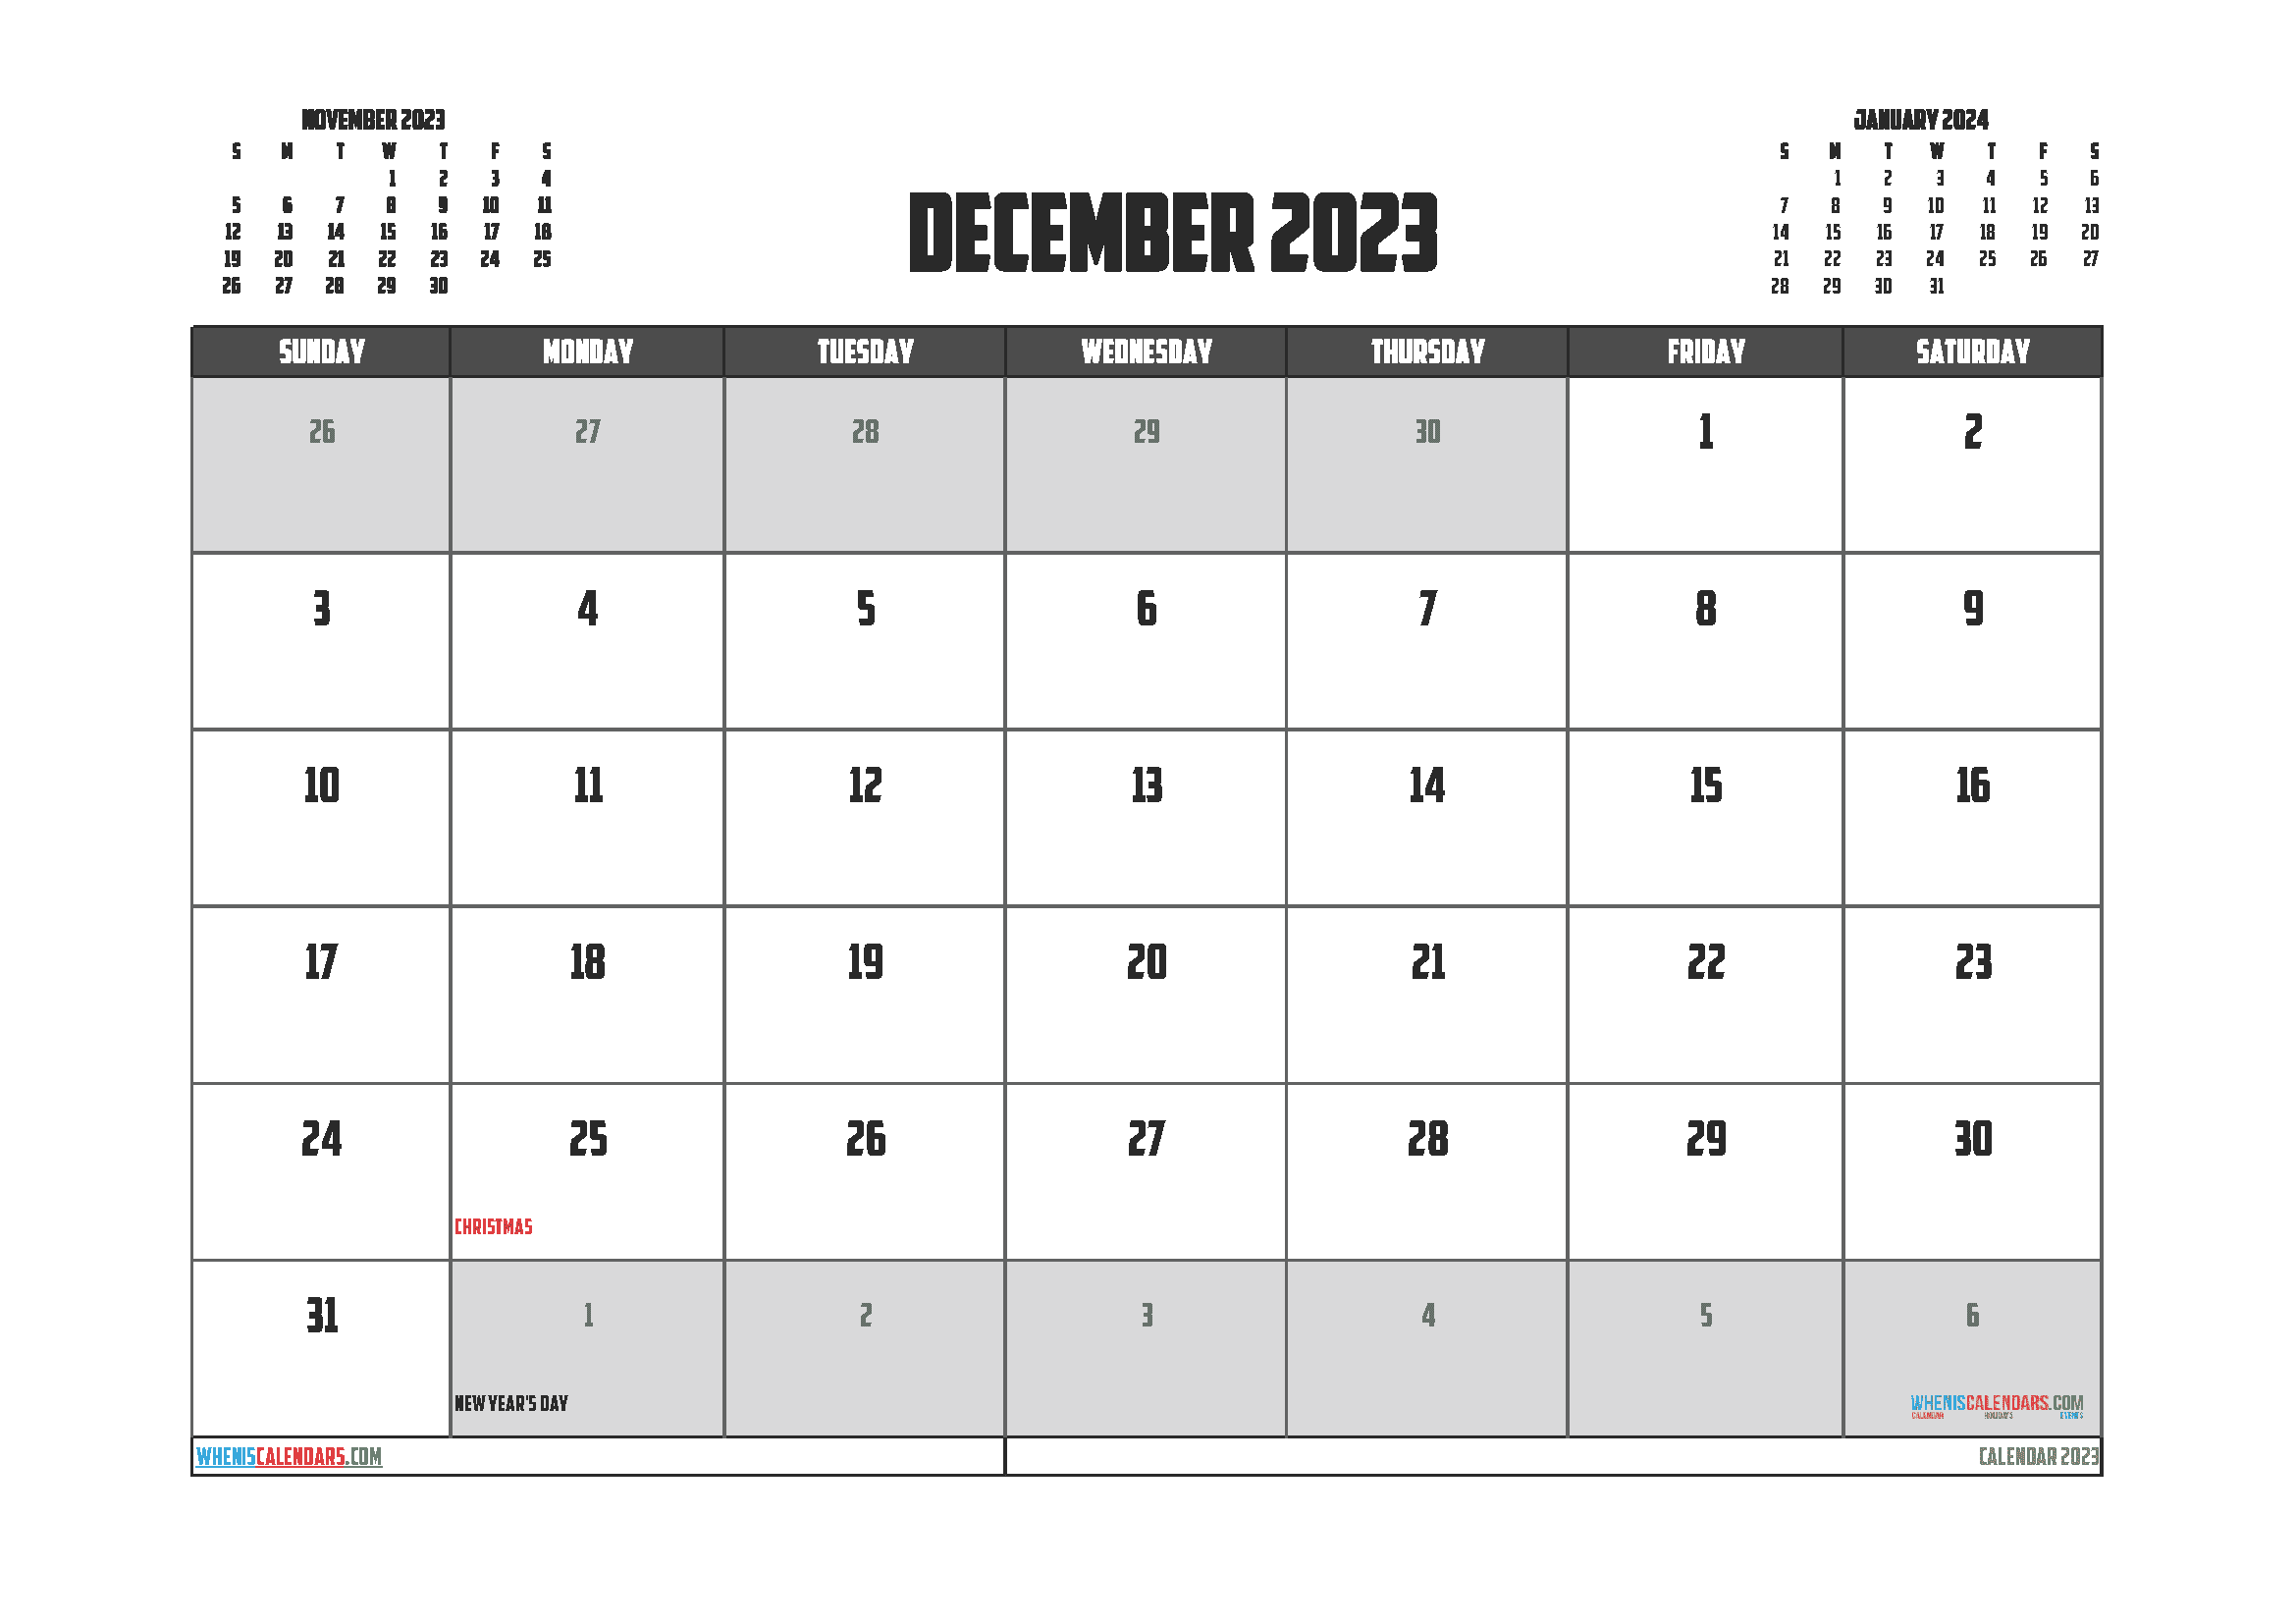 Free Calendar 2023 December with Holidays PDF in Landscape